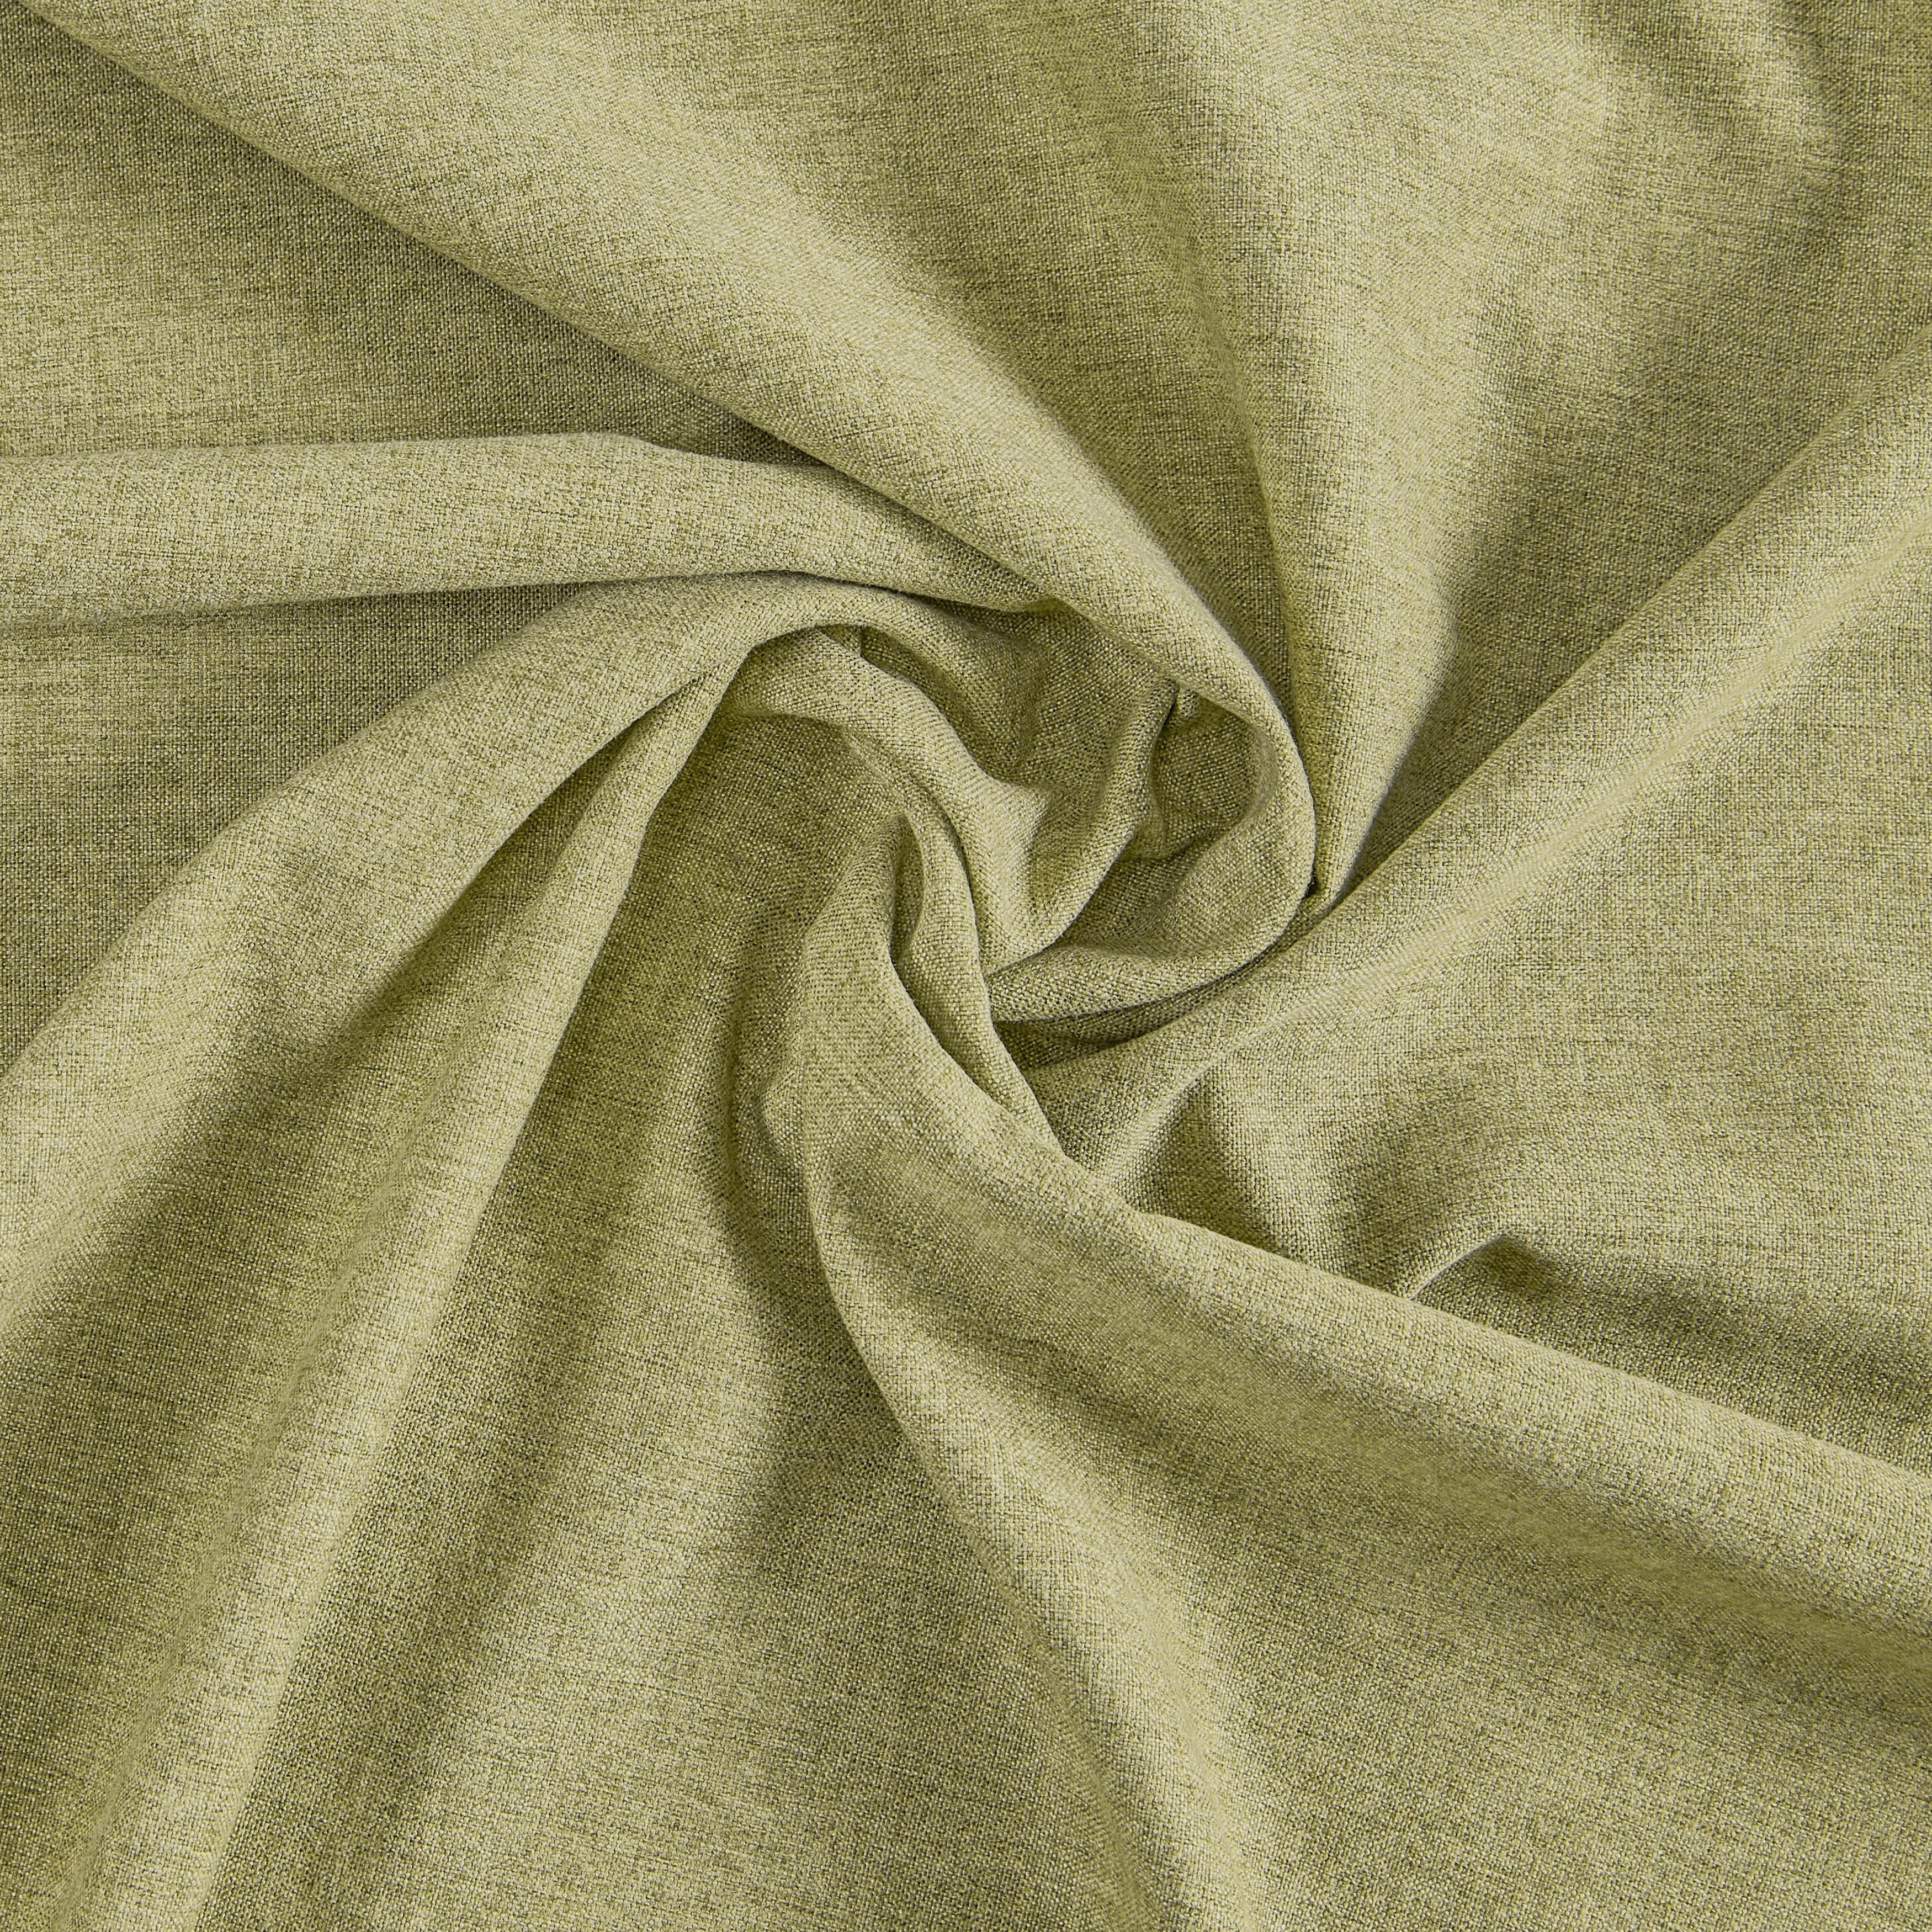 Končana Zavesa Ulrich - svetlo zelena, tekstil (135/245cm) - Modern Living